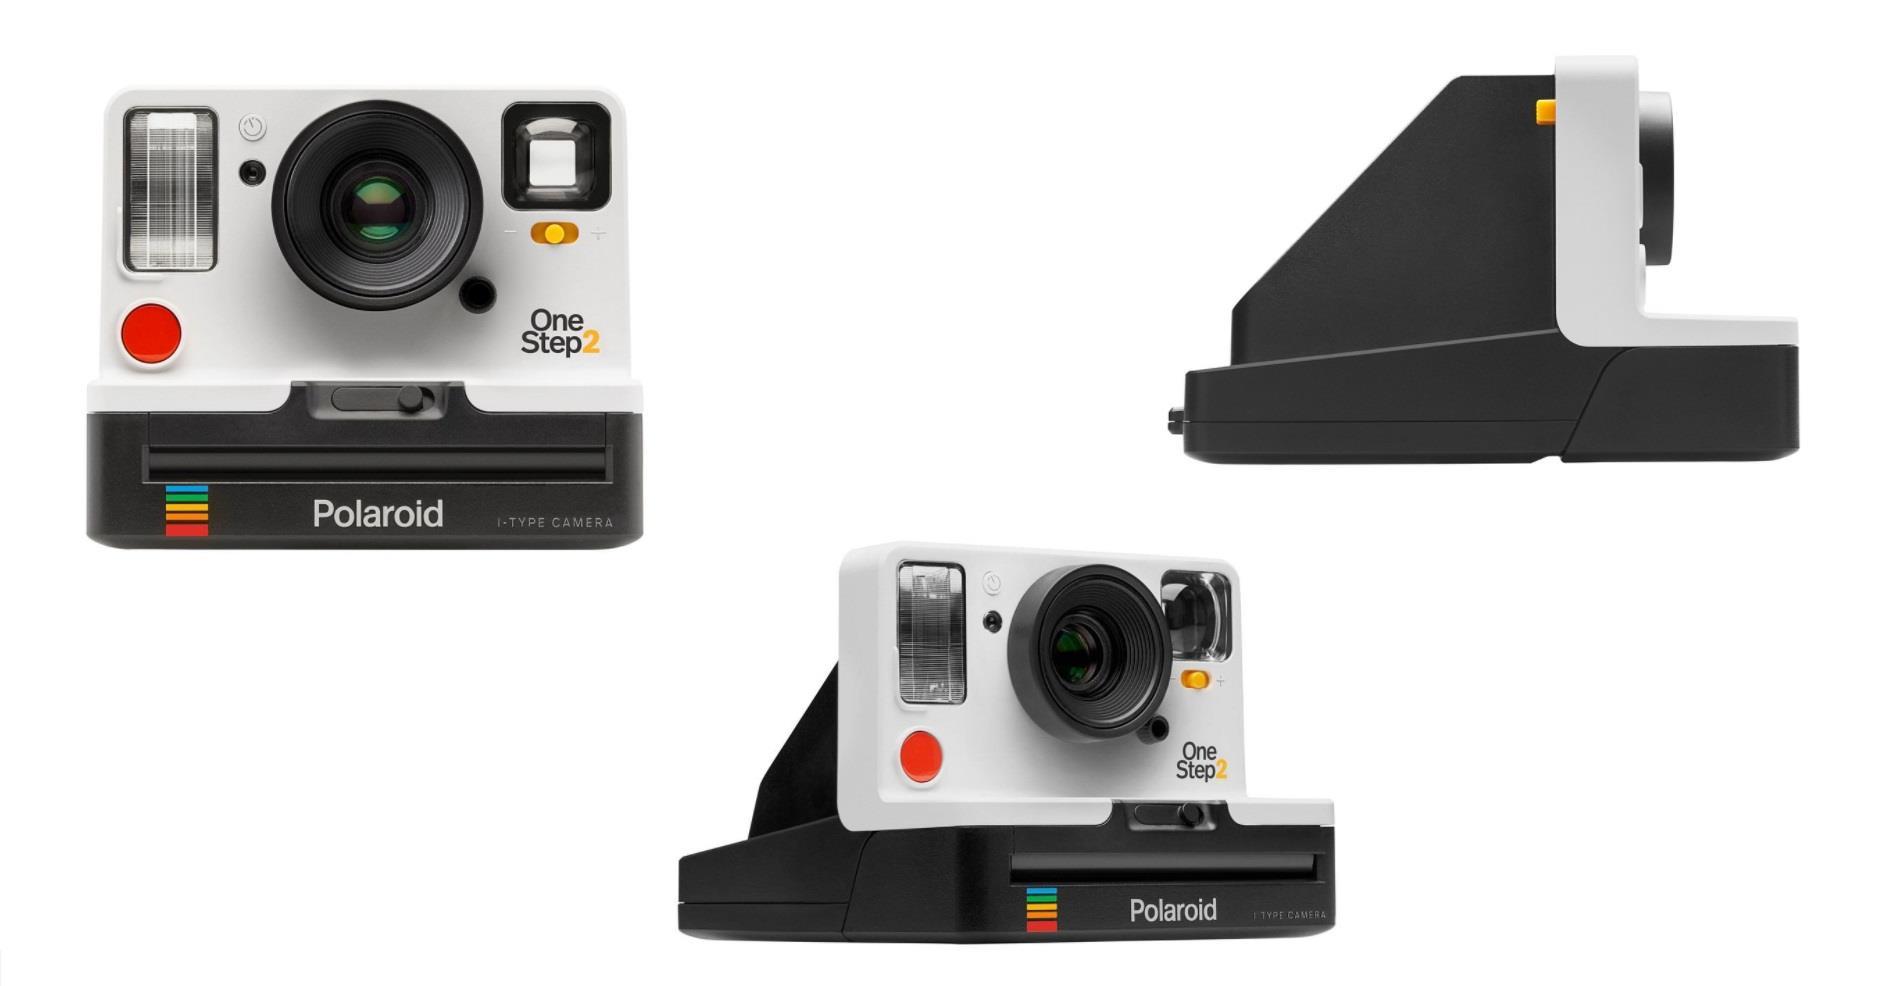 White Polaroid Original OneStep 2 i-Type Camera Instant Film Camera